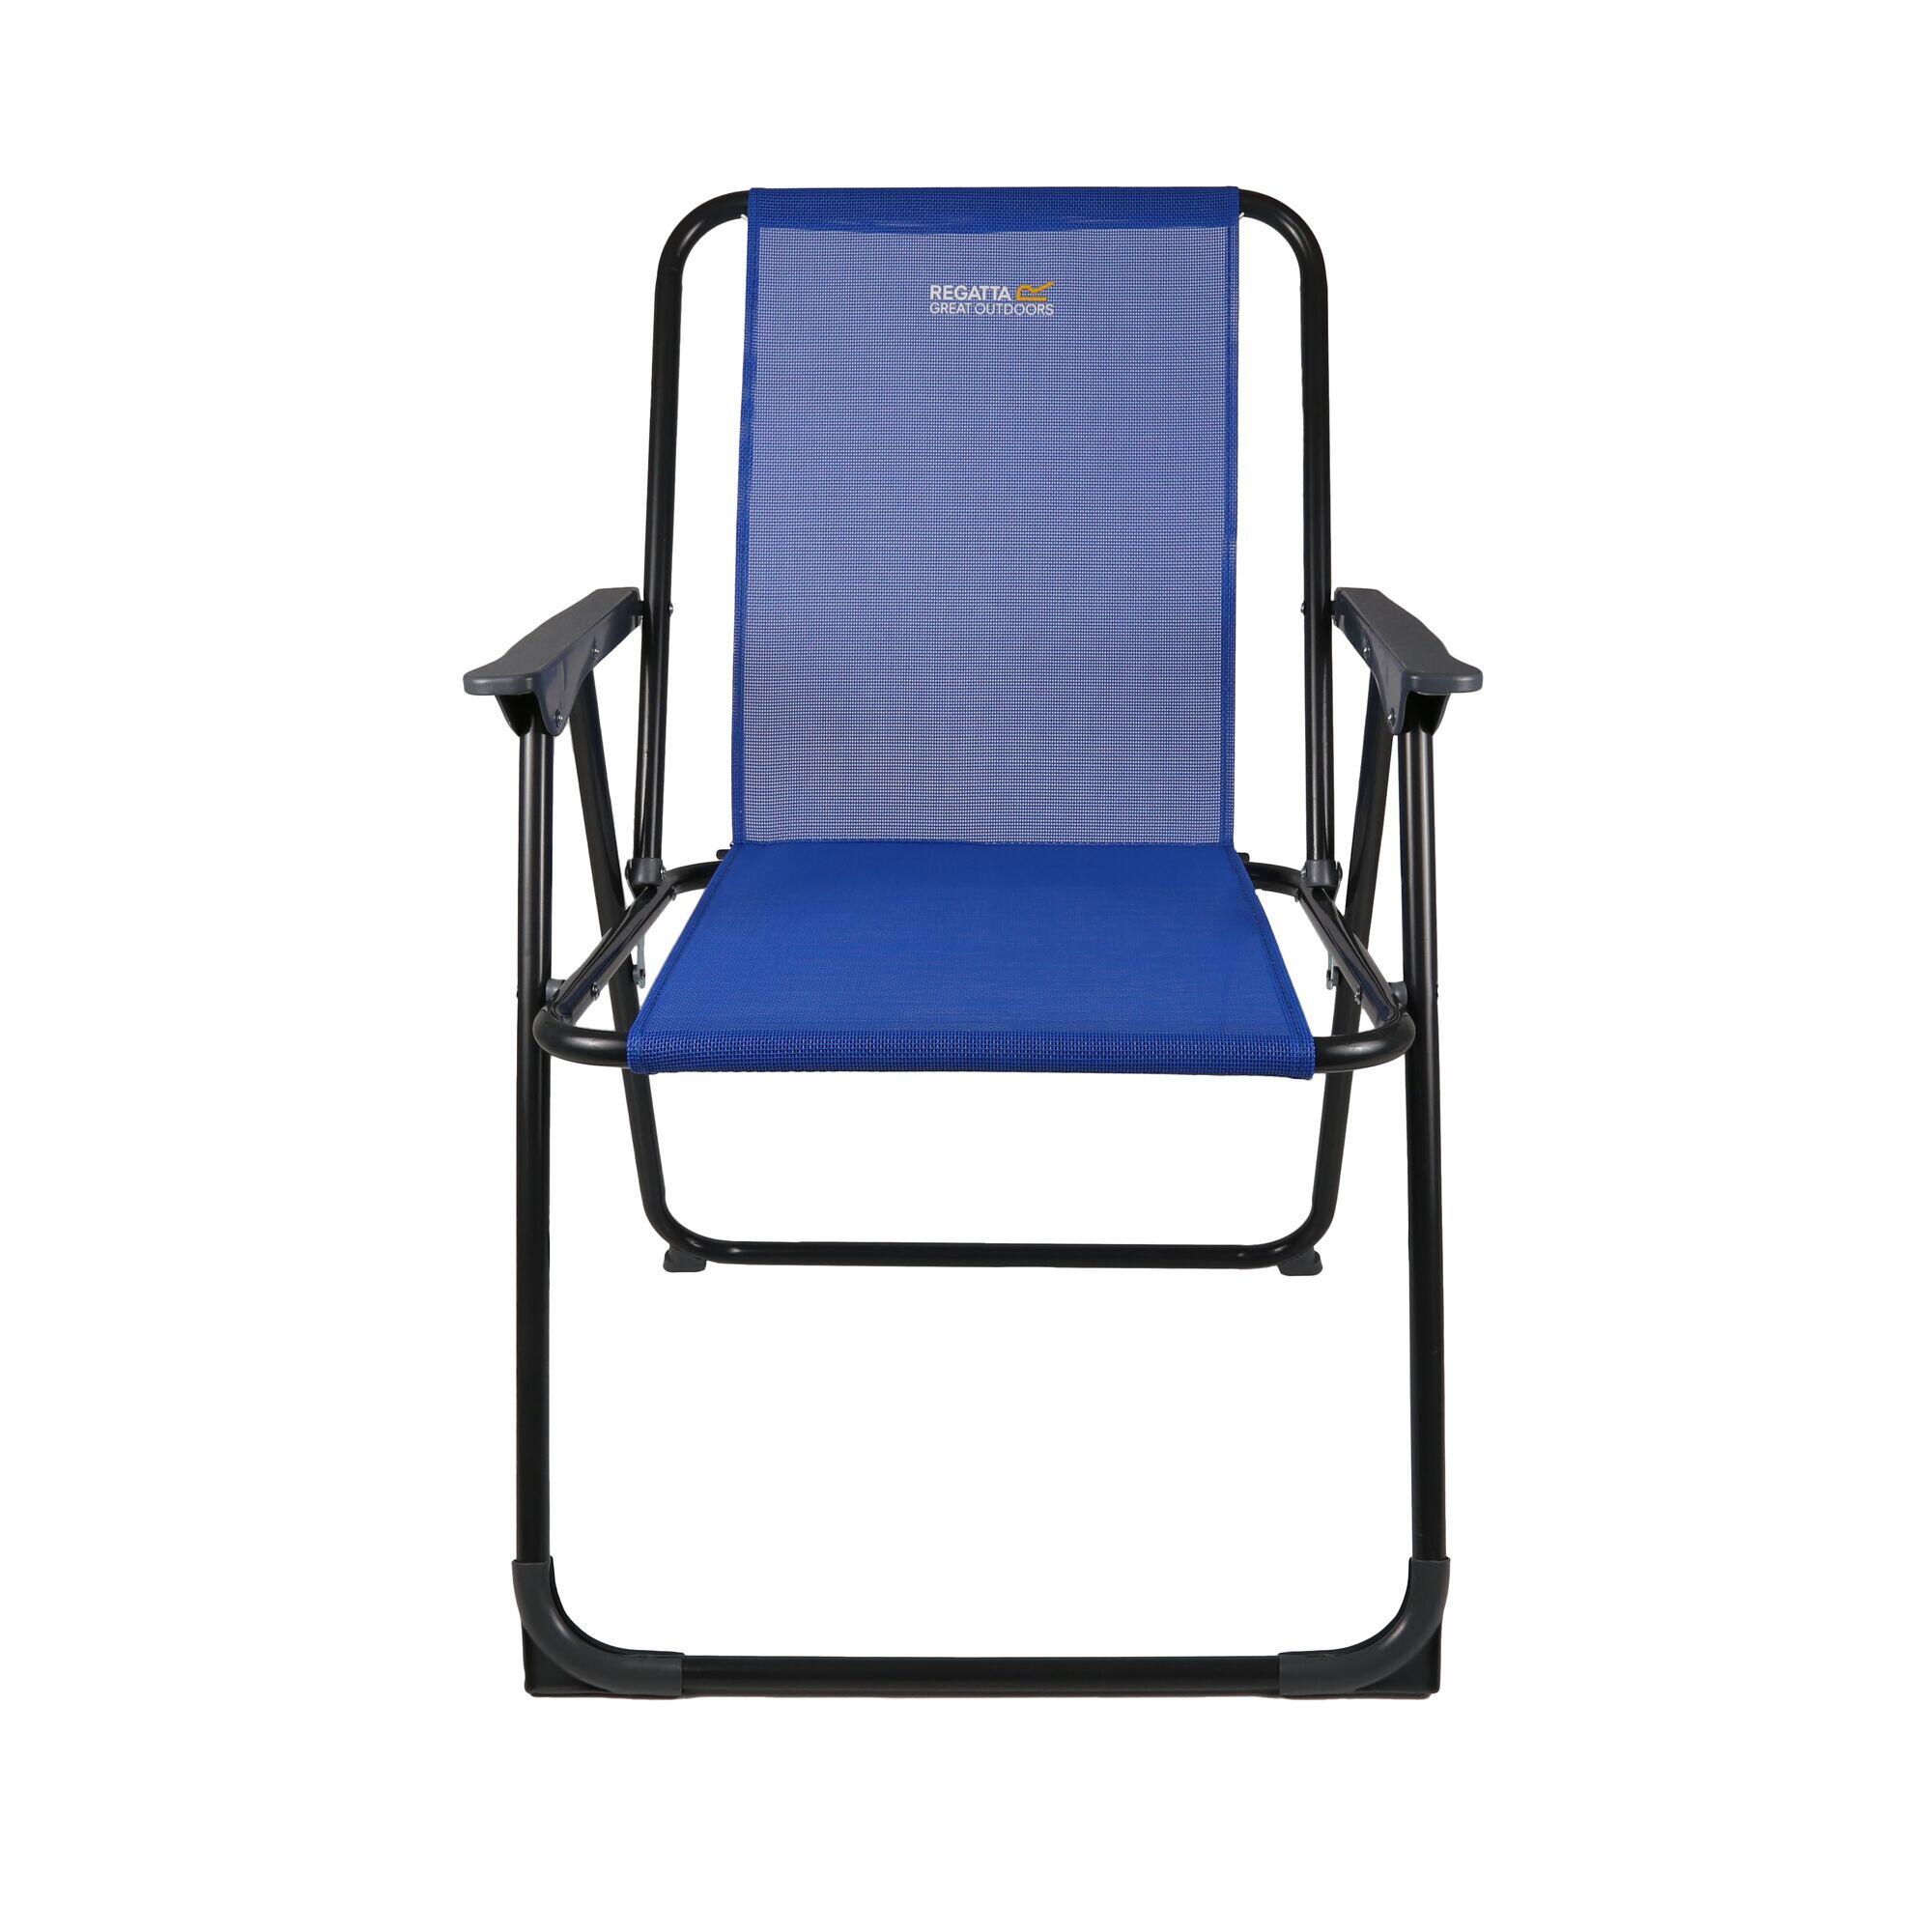 REGATTA Retexo Adults' Camping Chair - Oxford Blue